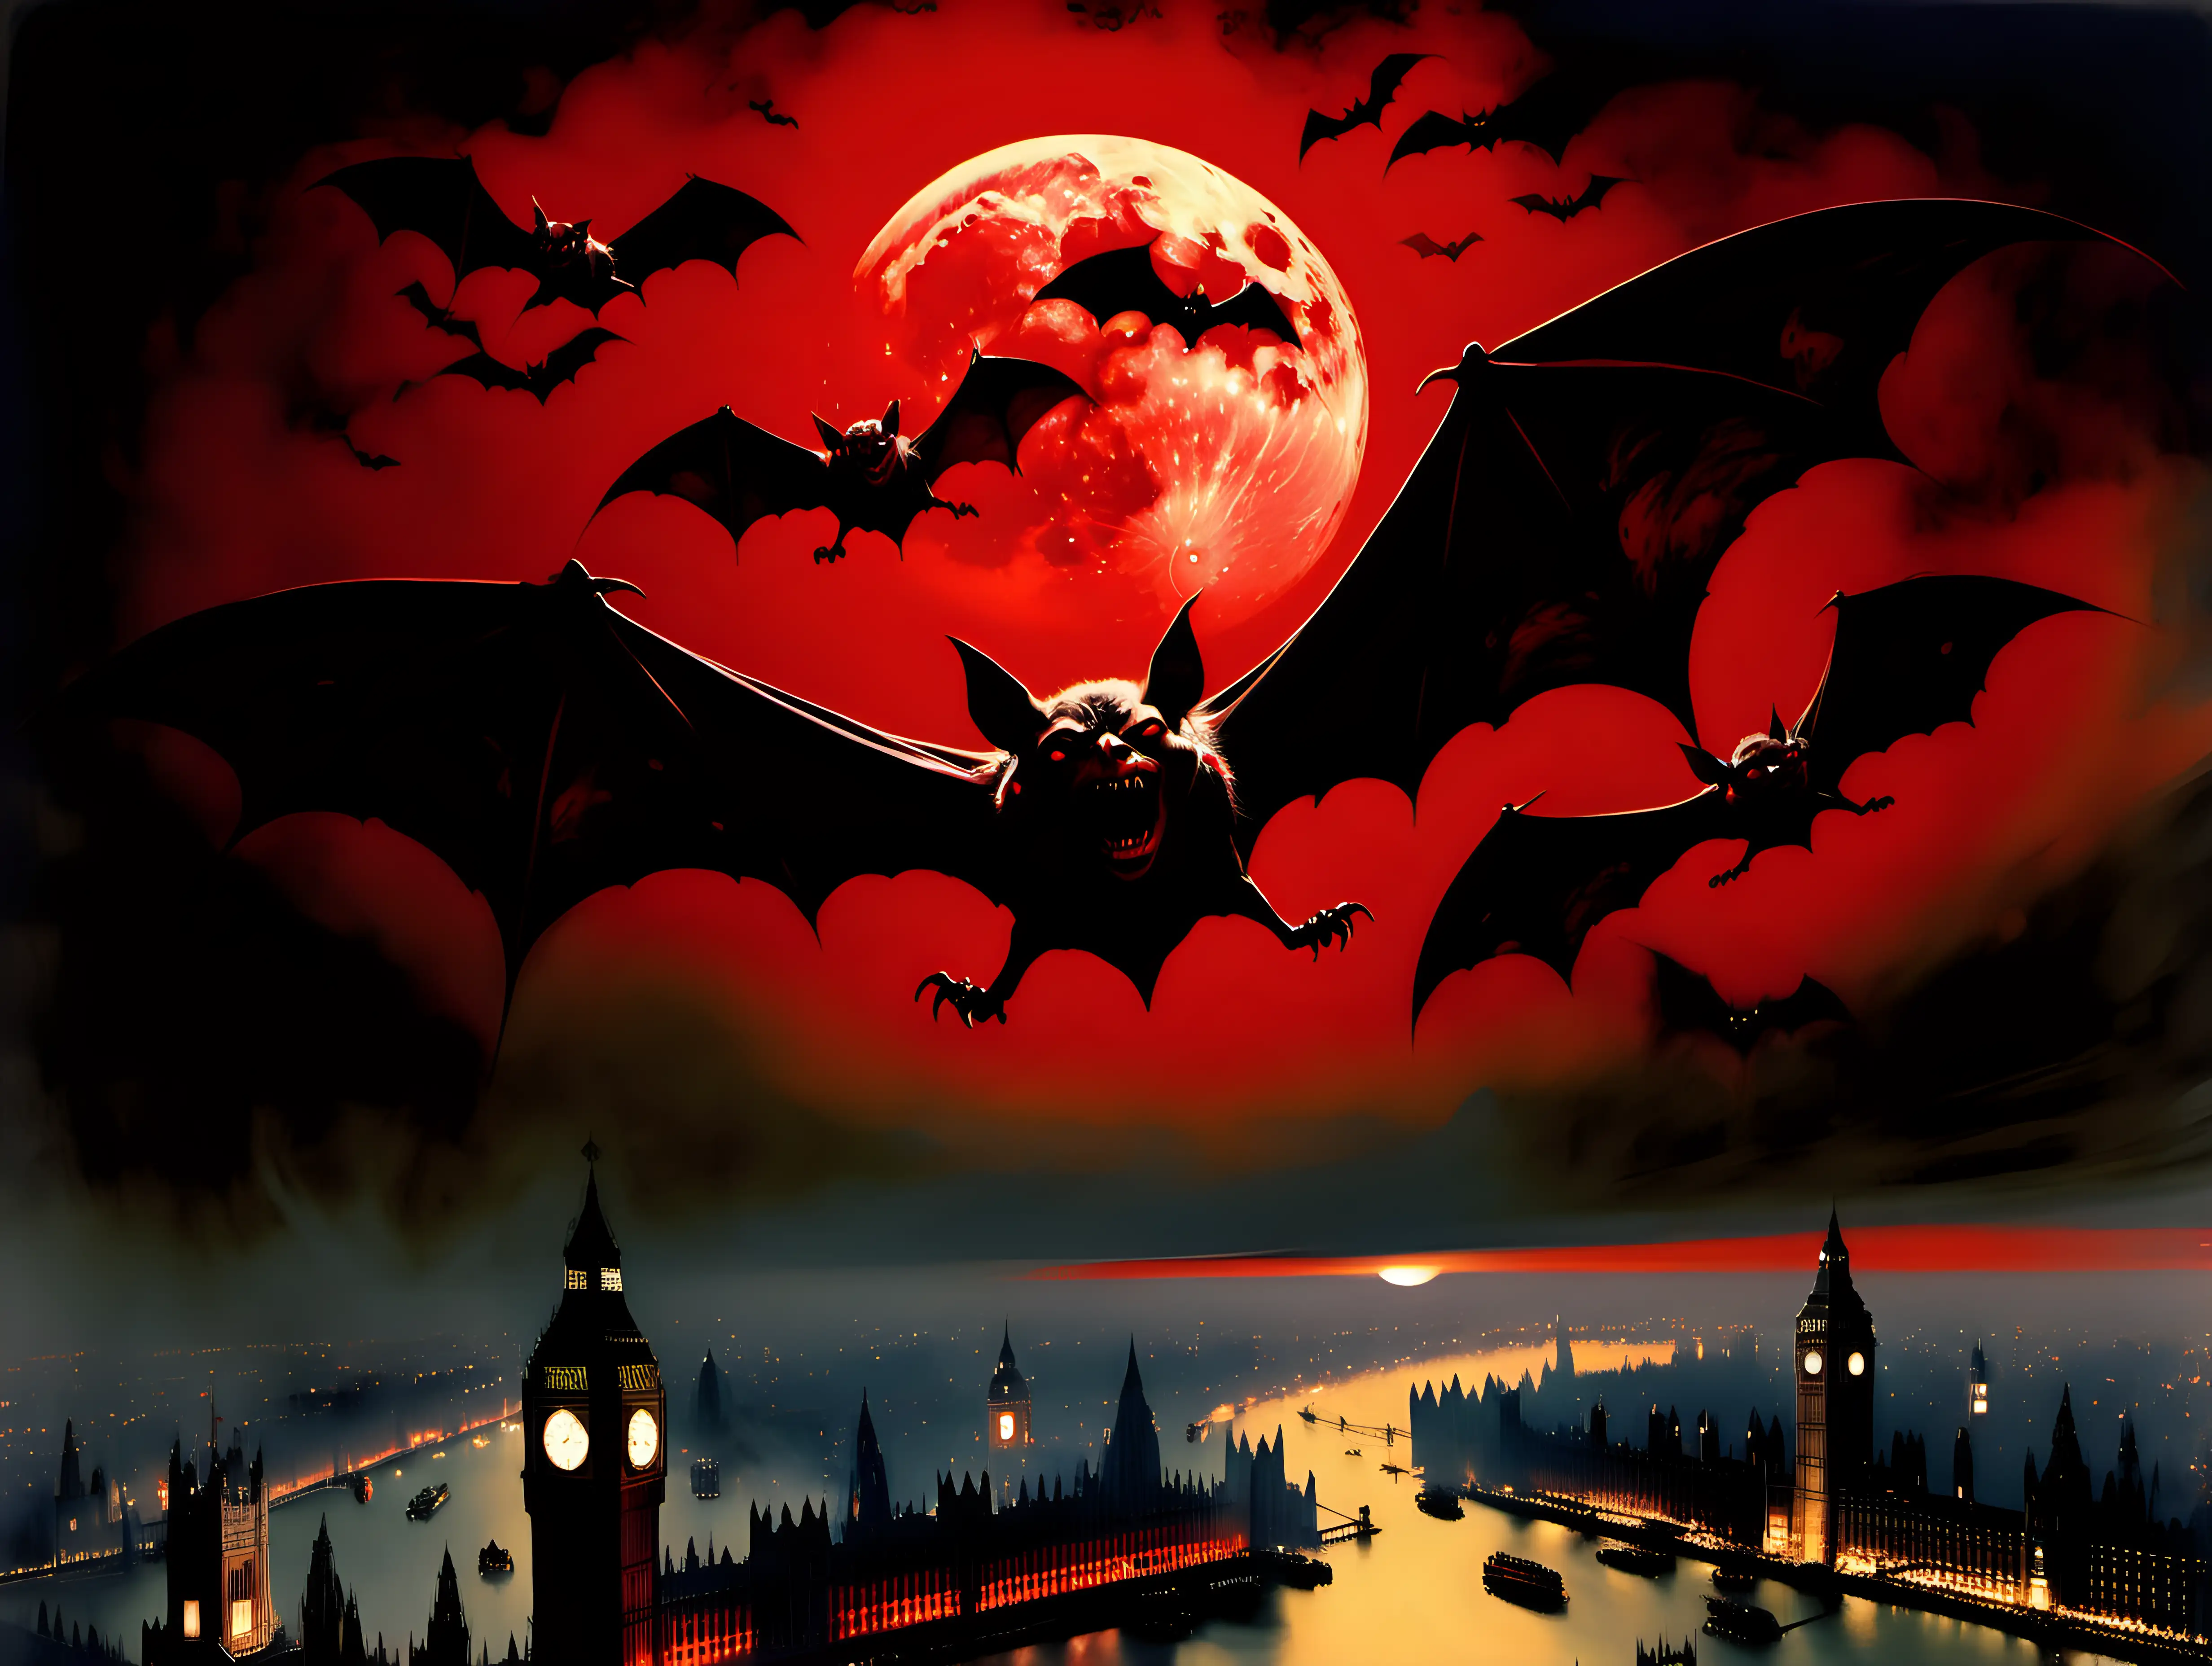 Vampire bats flying over London 1940 at night huge red moon
Frank Frazetta style